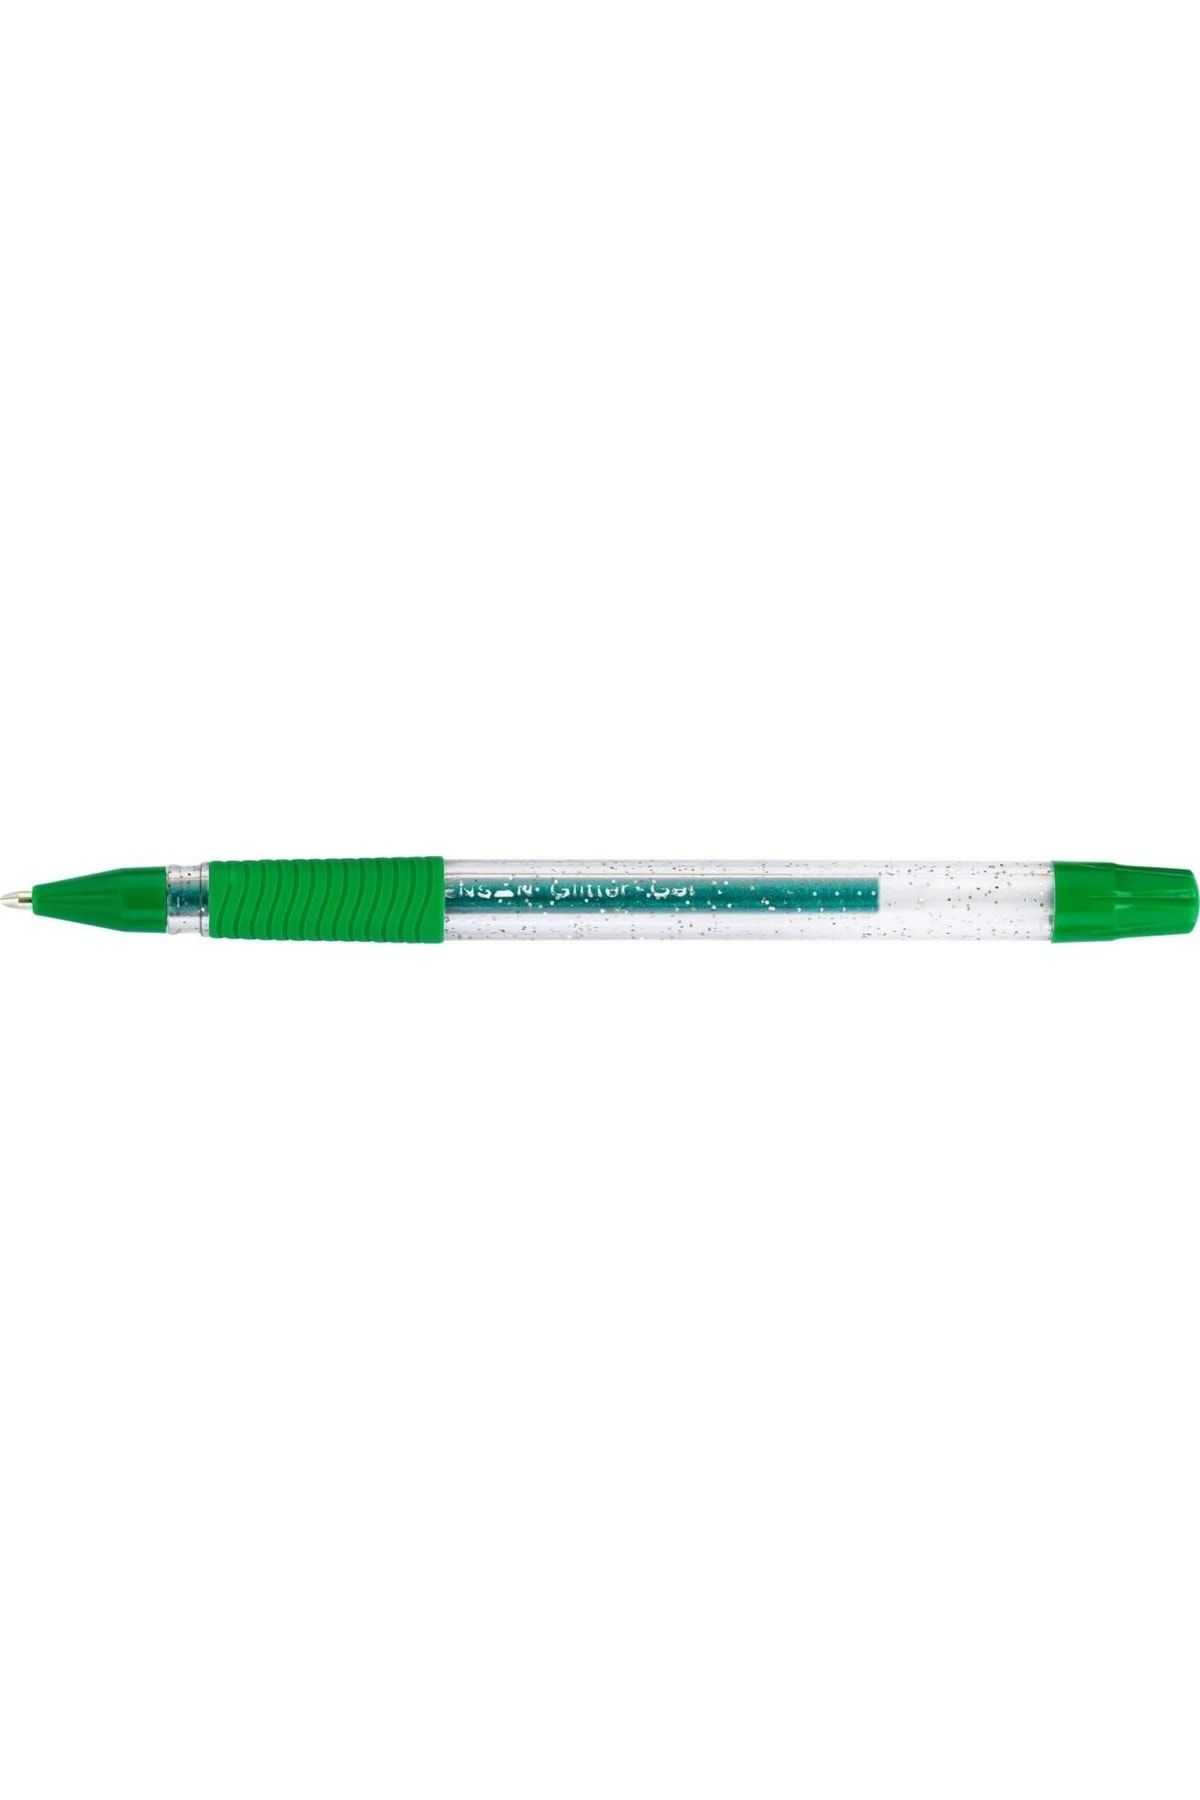 Pensan Tükenmez Kalem Jel Simli 1.0 Mm Yeşil